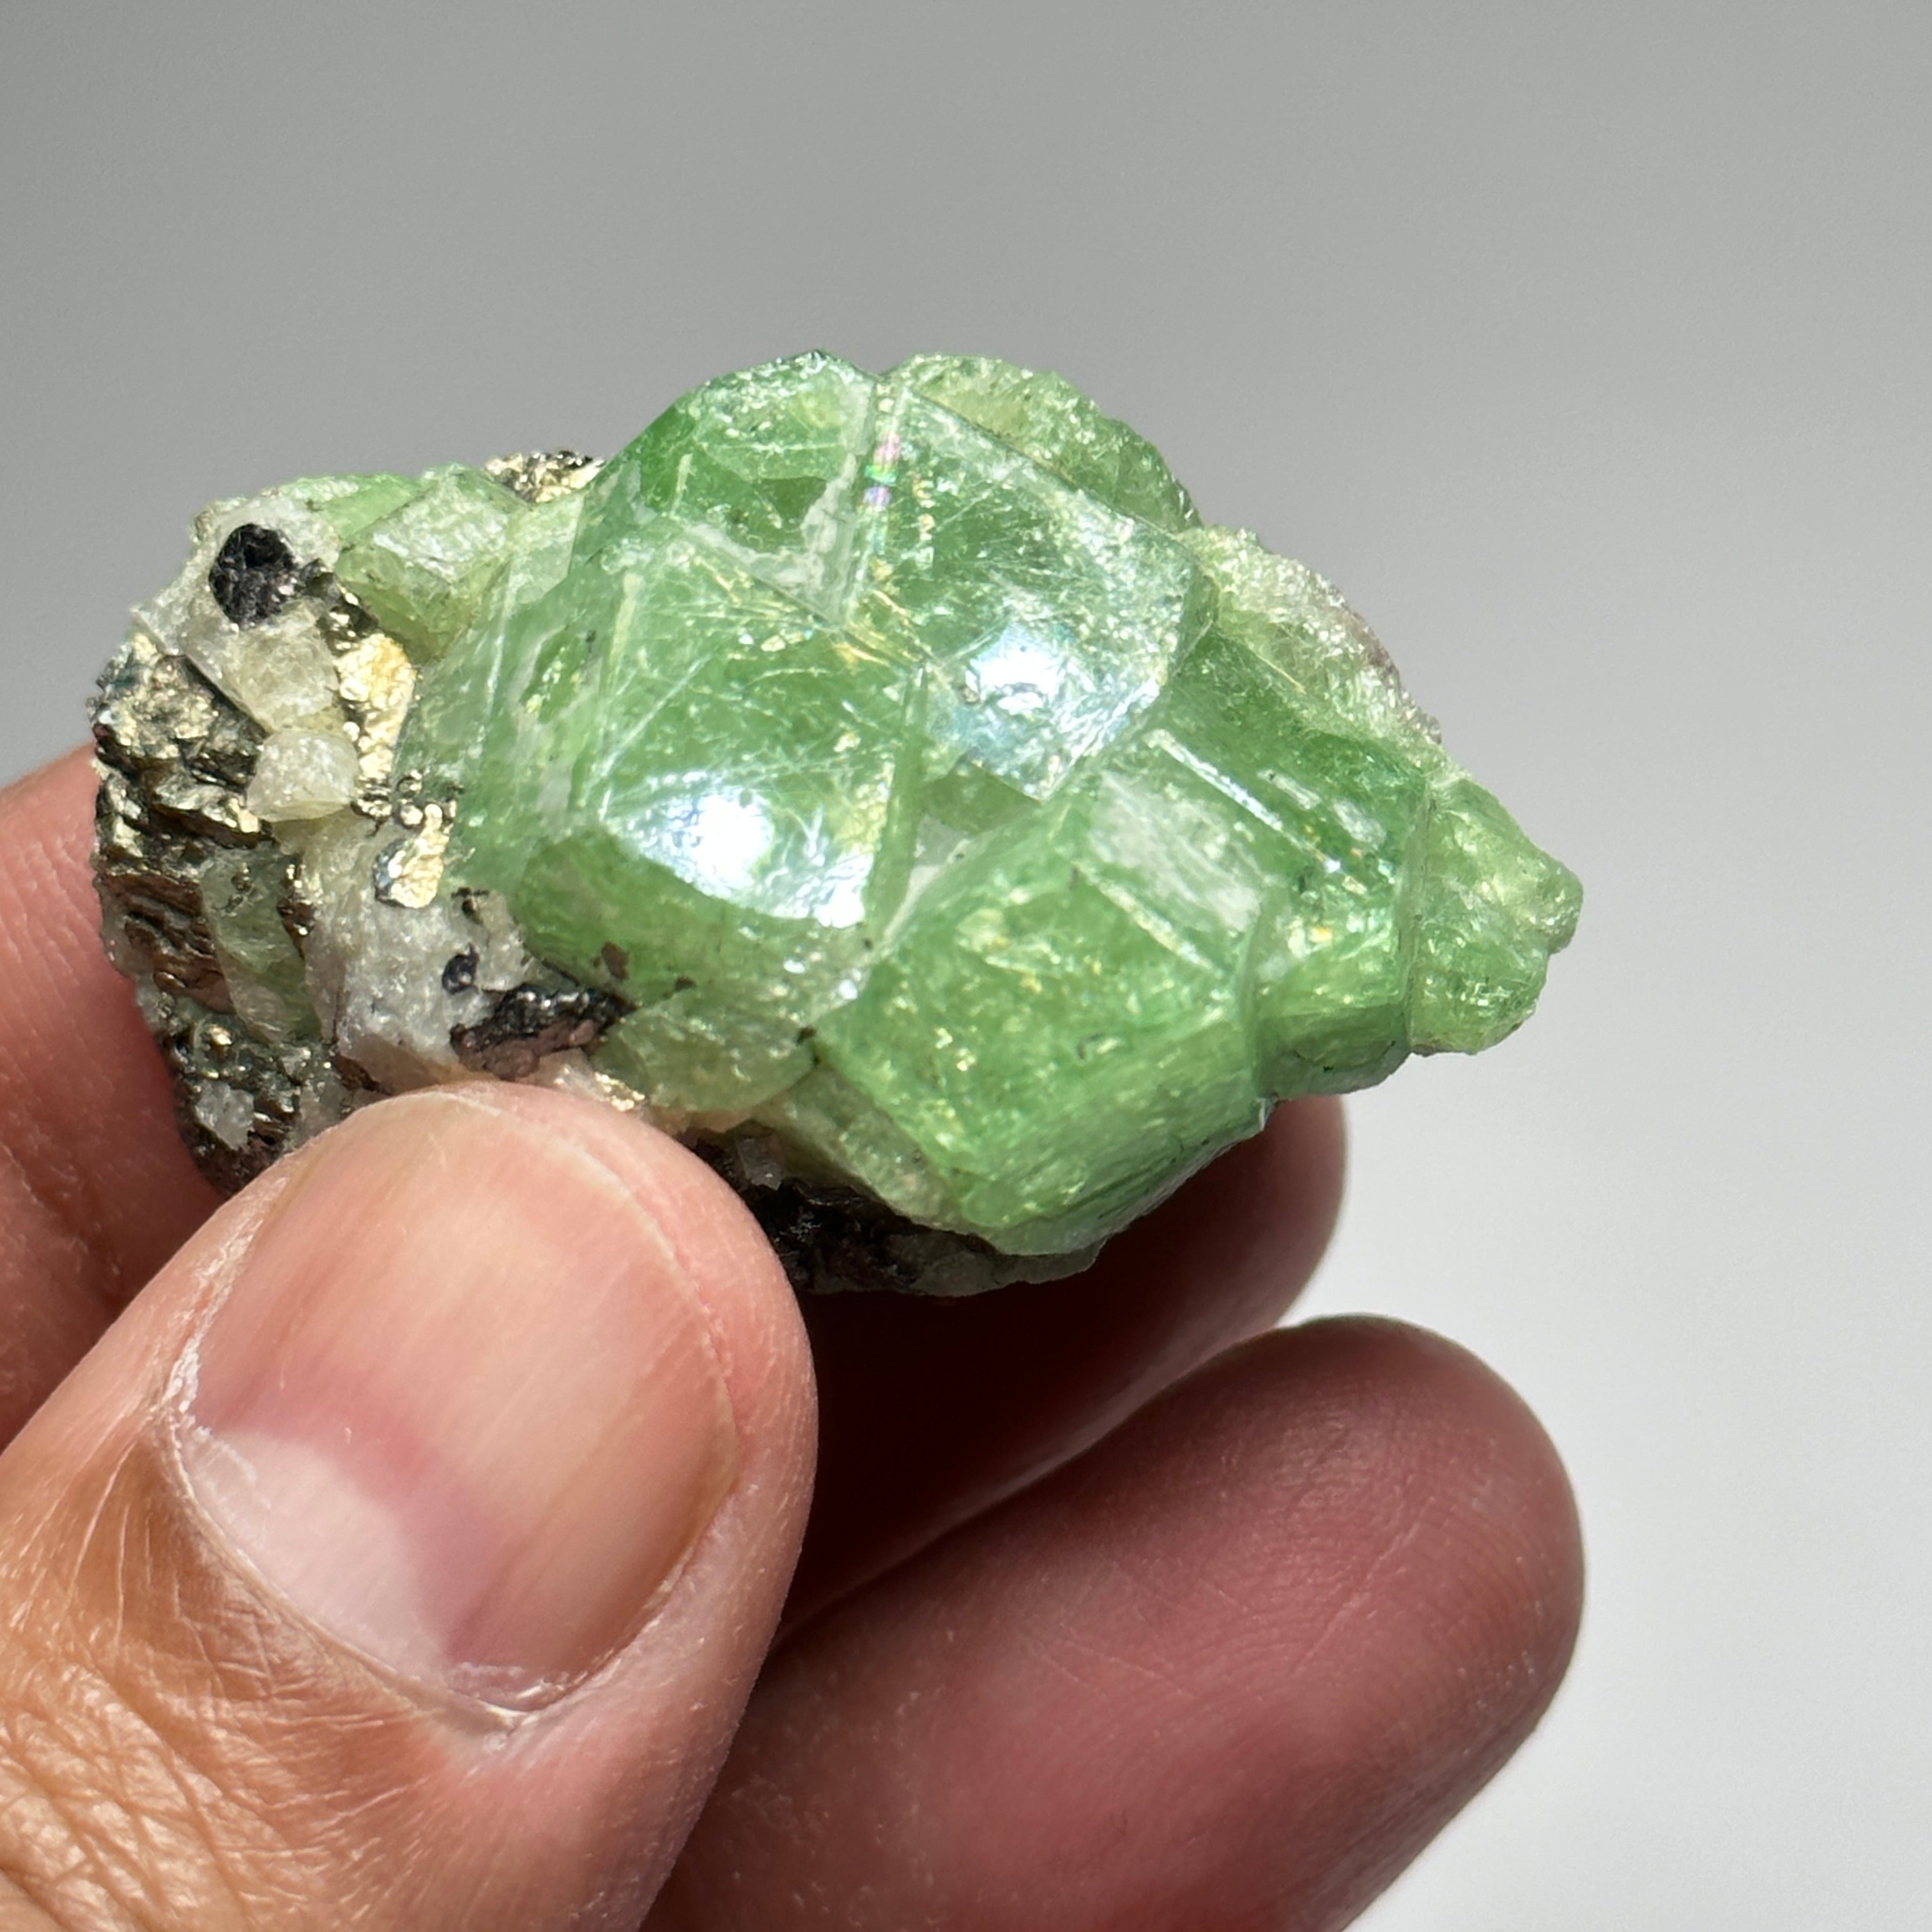 39.50gm / 197.50ct Tsavorite Crystal With Tanzanite And Pyrite on Matrix, Merelani, Tanzania. 41 x 27 x 26mm, very rare crystallization